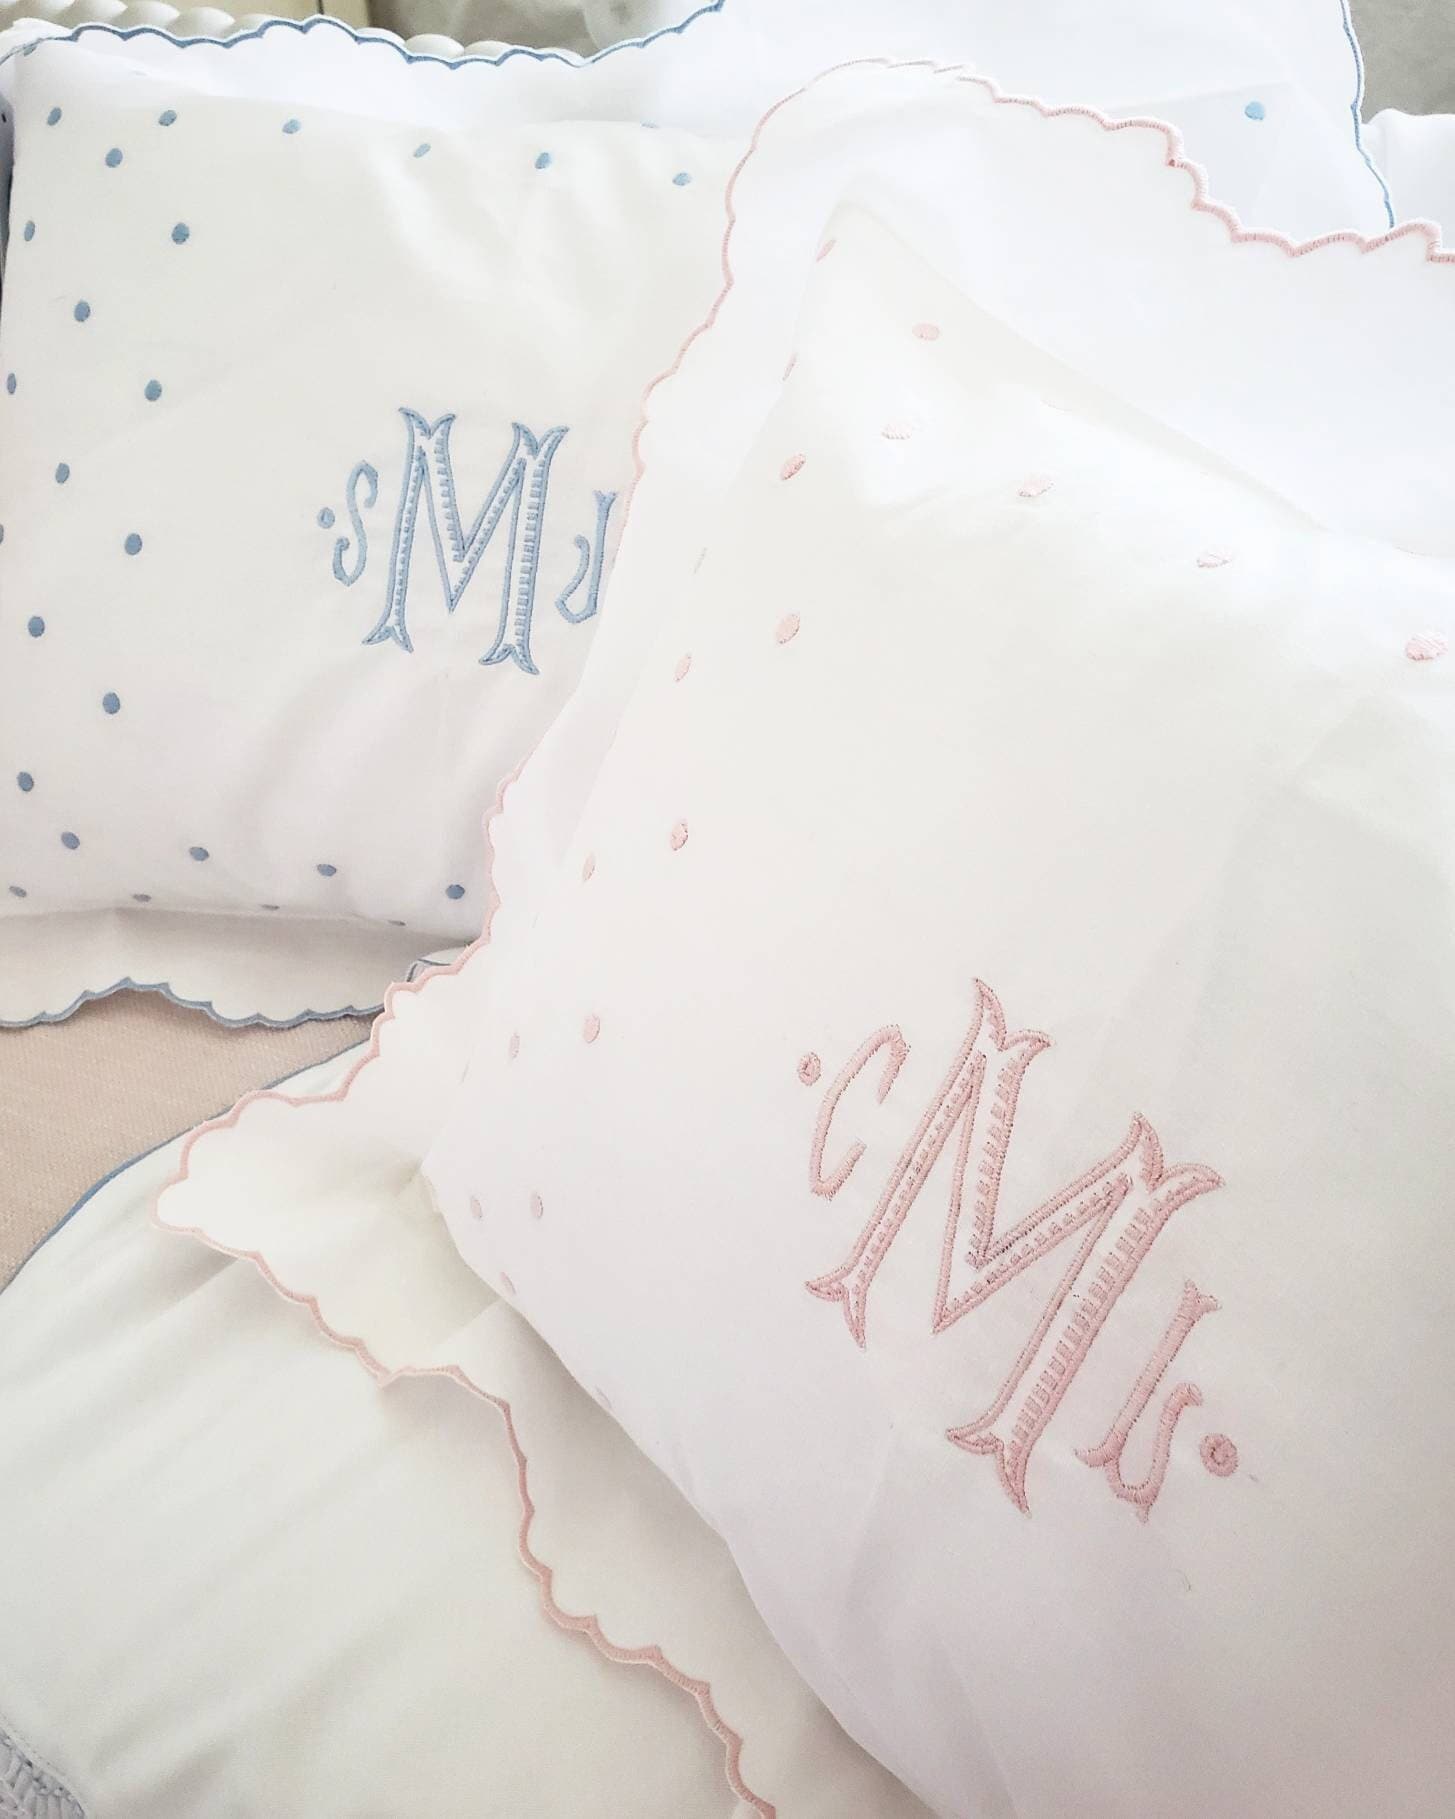 Scalloped Monogram Pillow Case With Insert – Belles & Beaux®